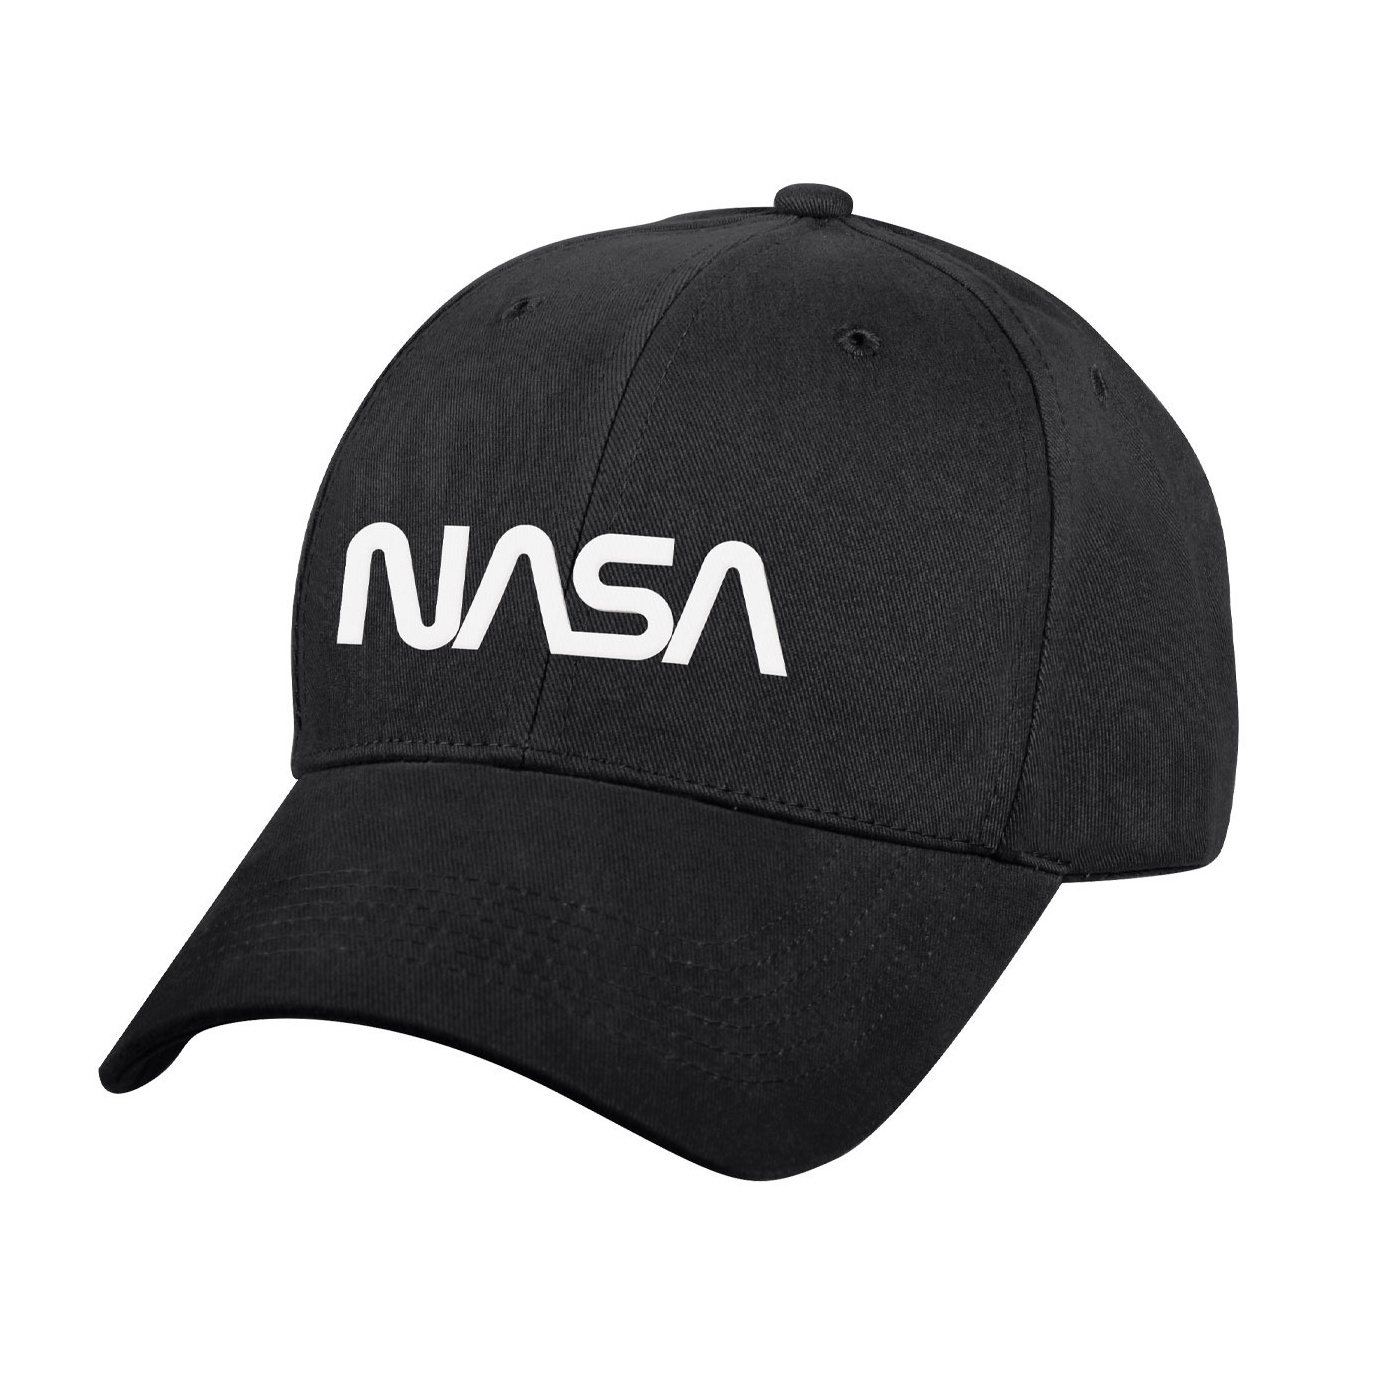 čepice baseball NASA černá